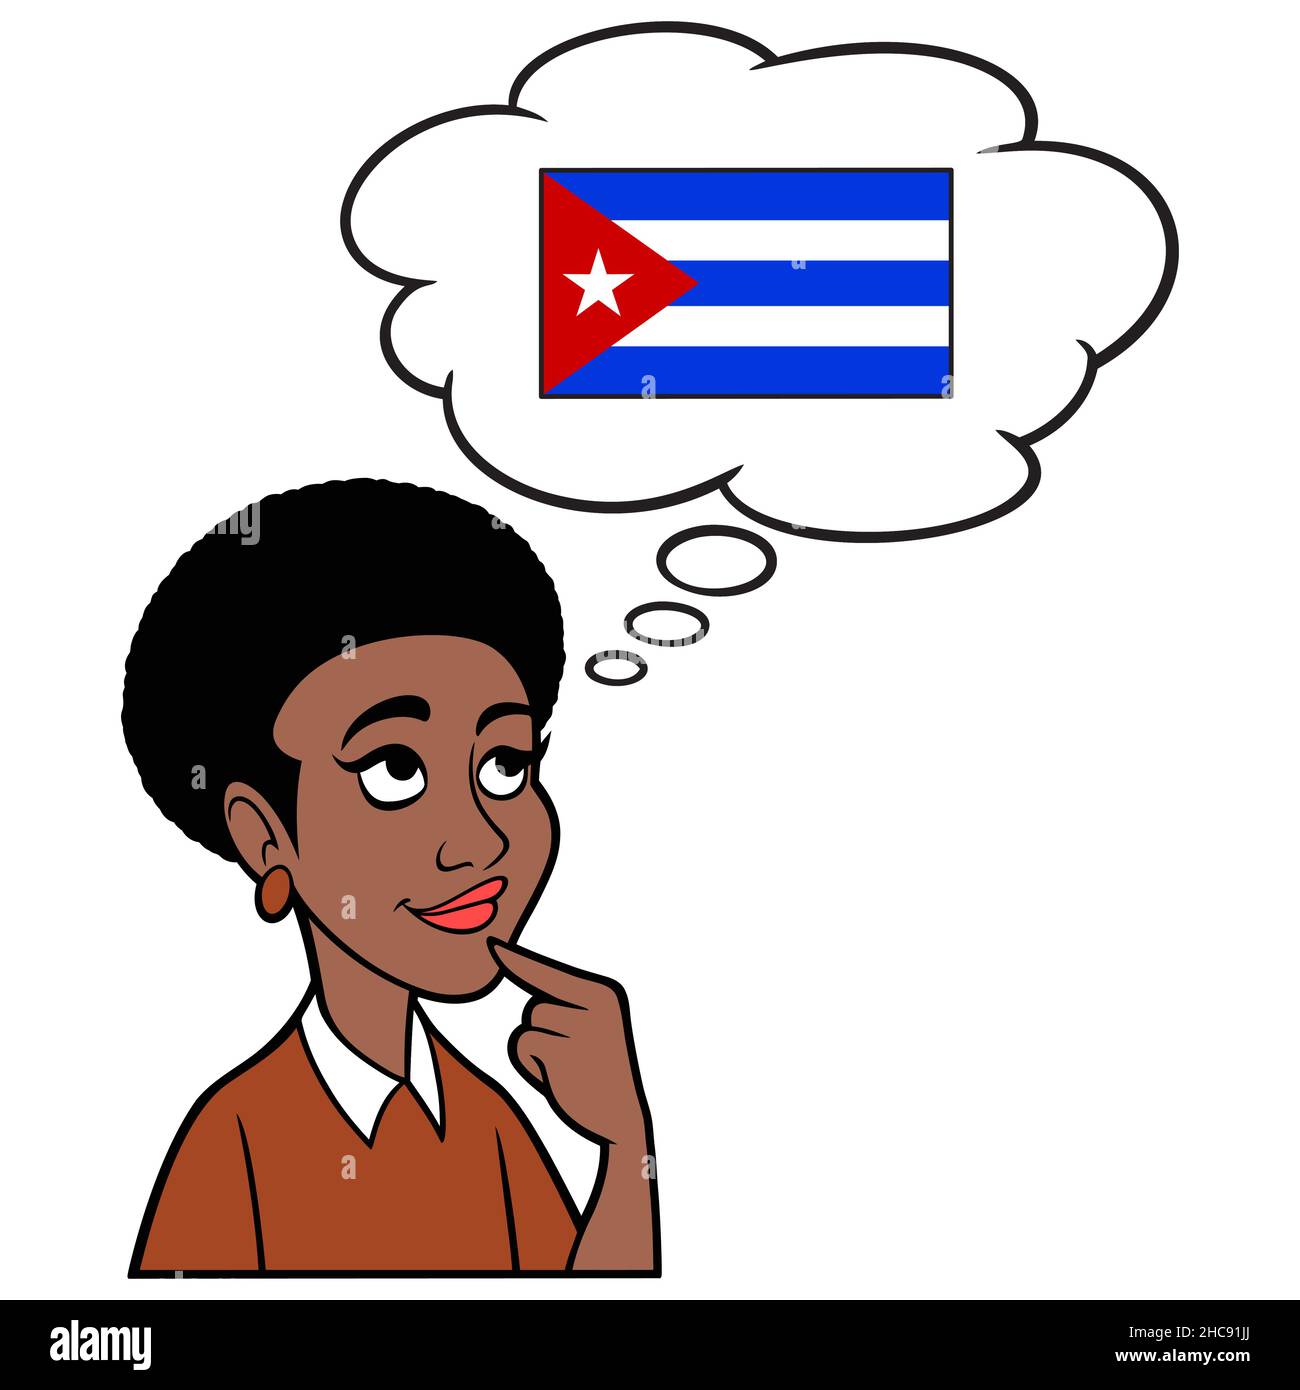 Black Woman thinking about Cuba - A cartoon illustration of a Black Woman thinking about a vacation trip to Cuba. Stock Vector